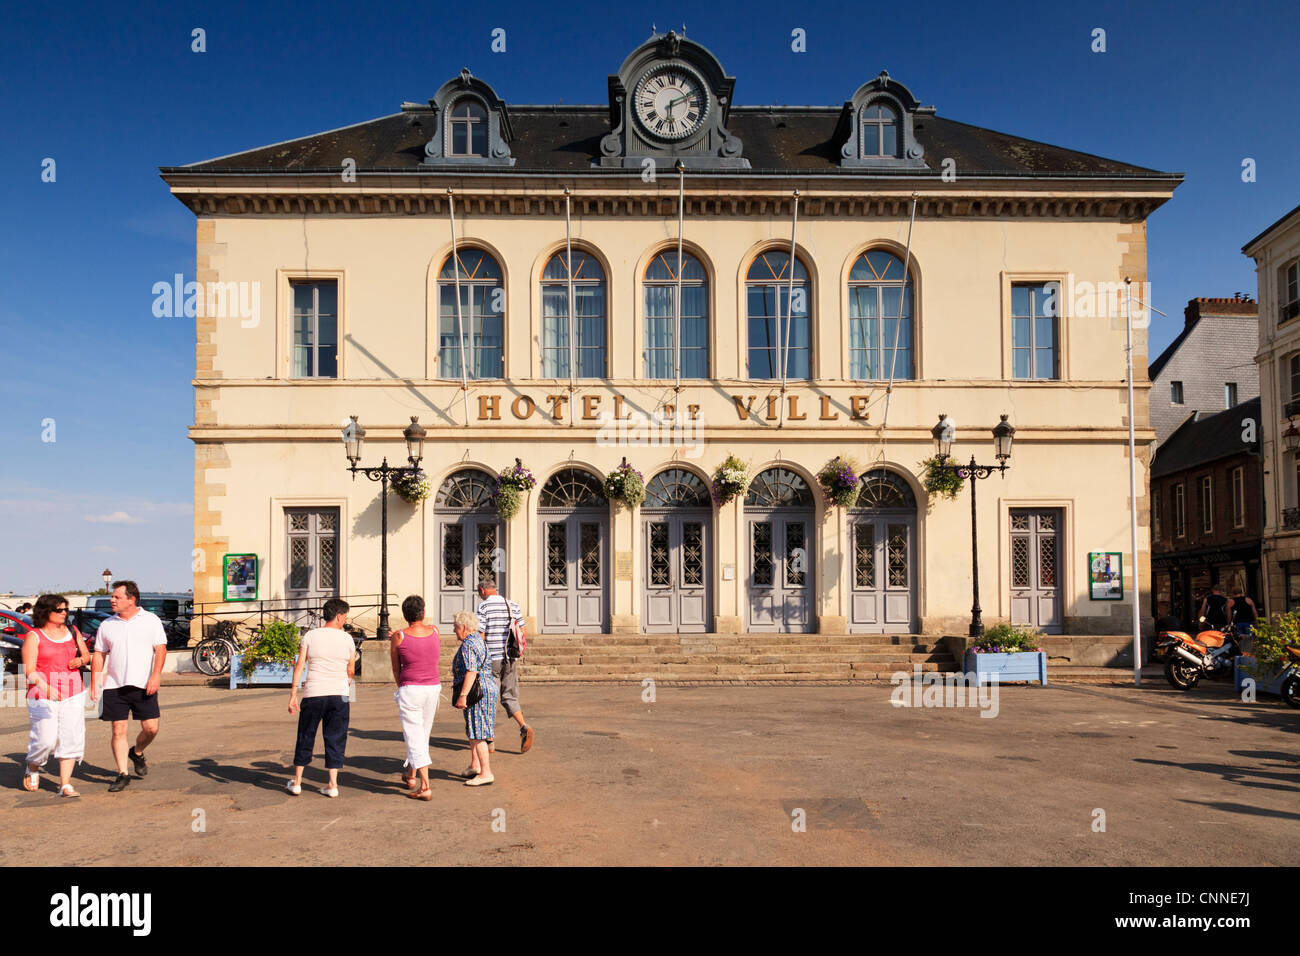 Hotel De Ville Honfleur Normandy France People Walking In The Stock Photo Alamy